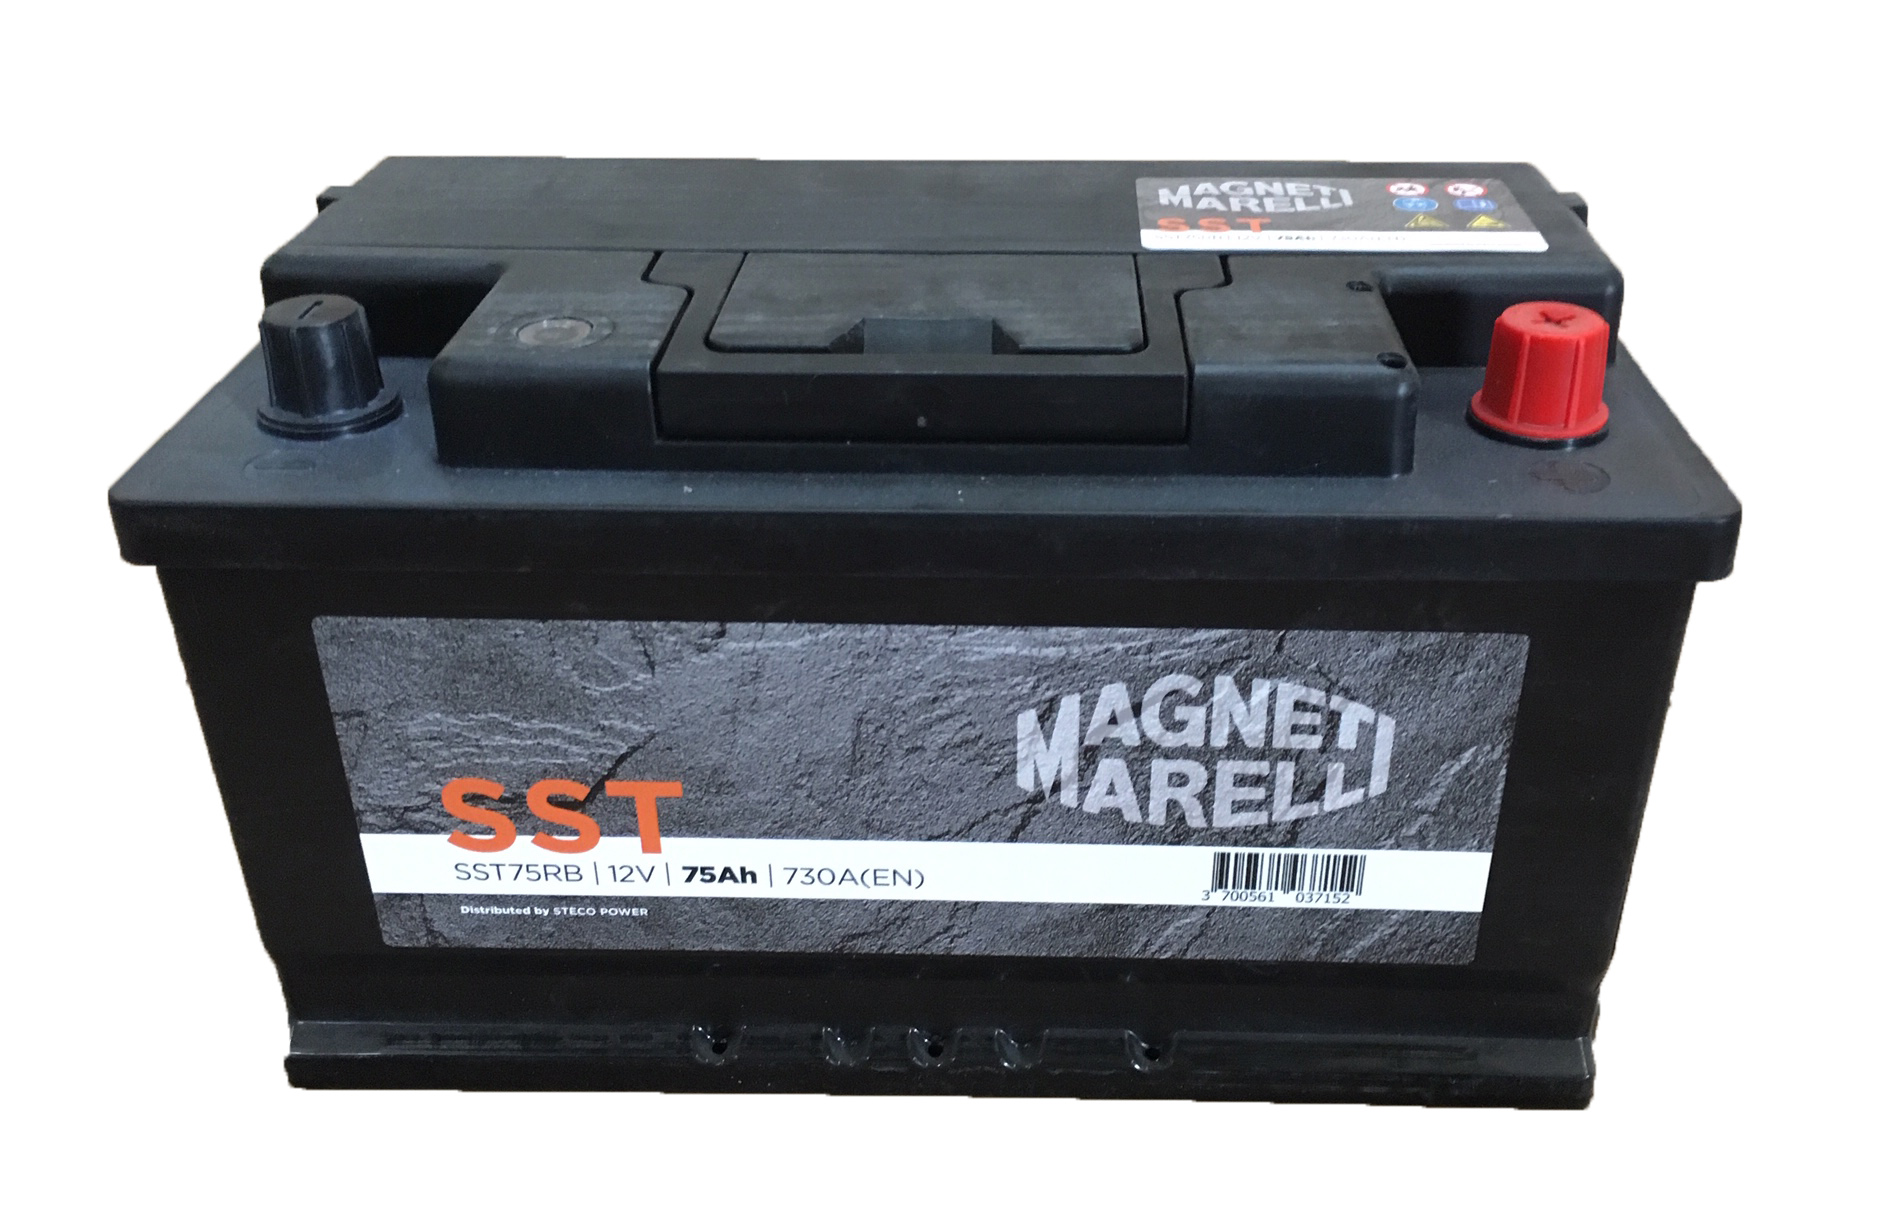 Magneti marelli 069075730008 Battery Magneti marelli 12V 75AH 730A(EN) R+ 069075730008